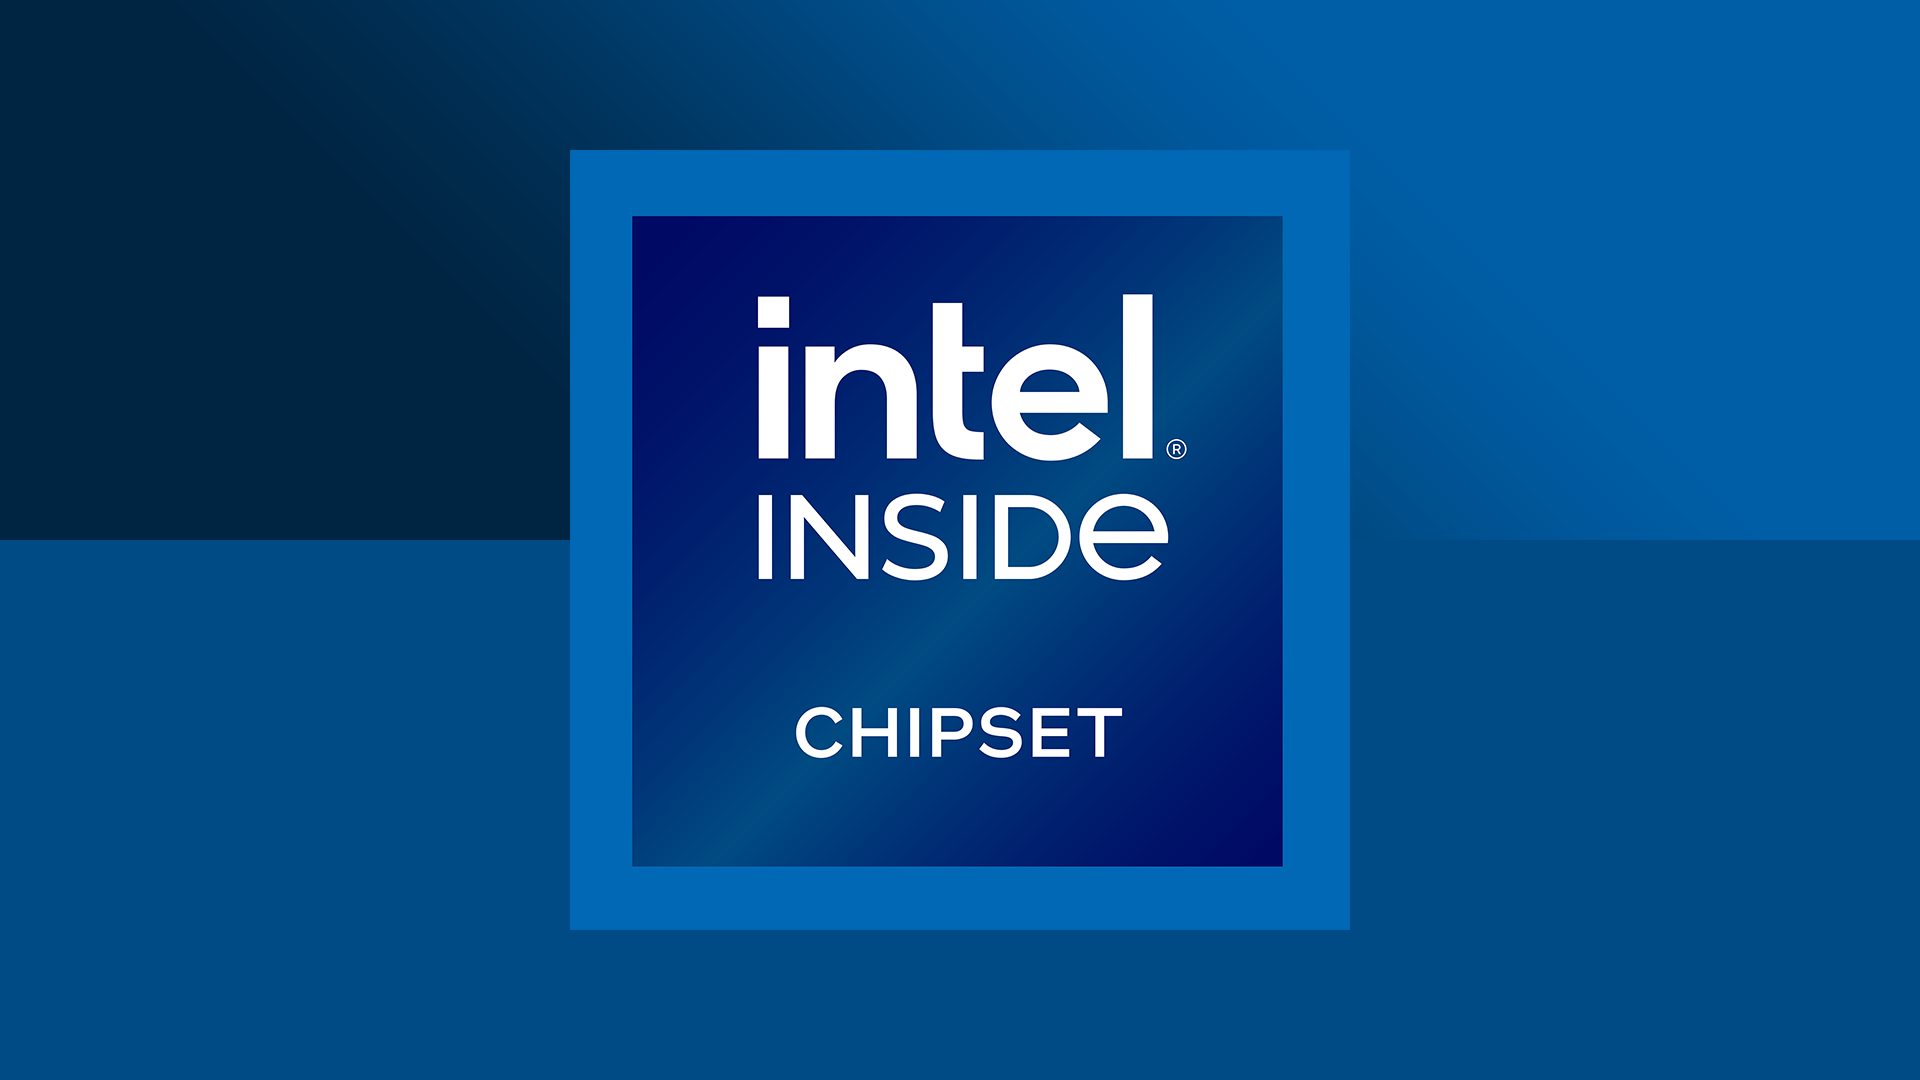 Intel 7 series chipset. Intel Chipset Driver. 6 Series Chipset. Chipset Family. 10 Series Chipset.